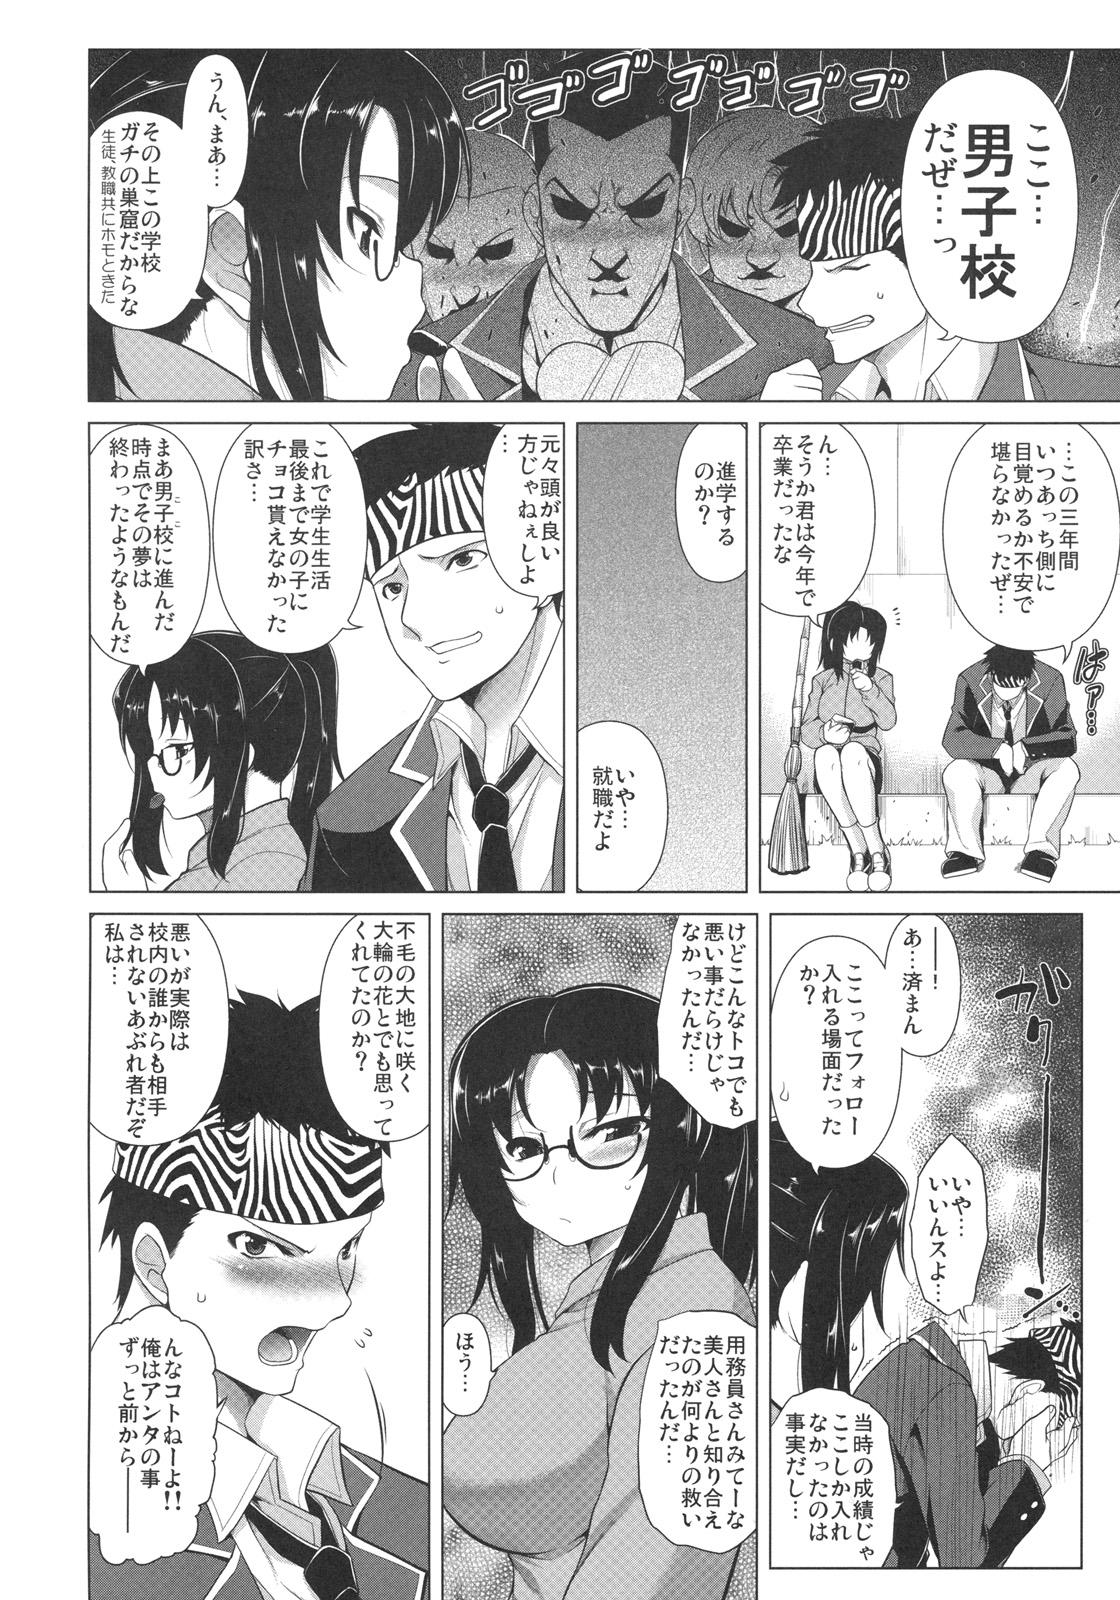 Shinzui Valentine Special Vol. 2 65